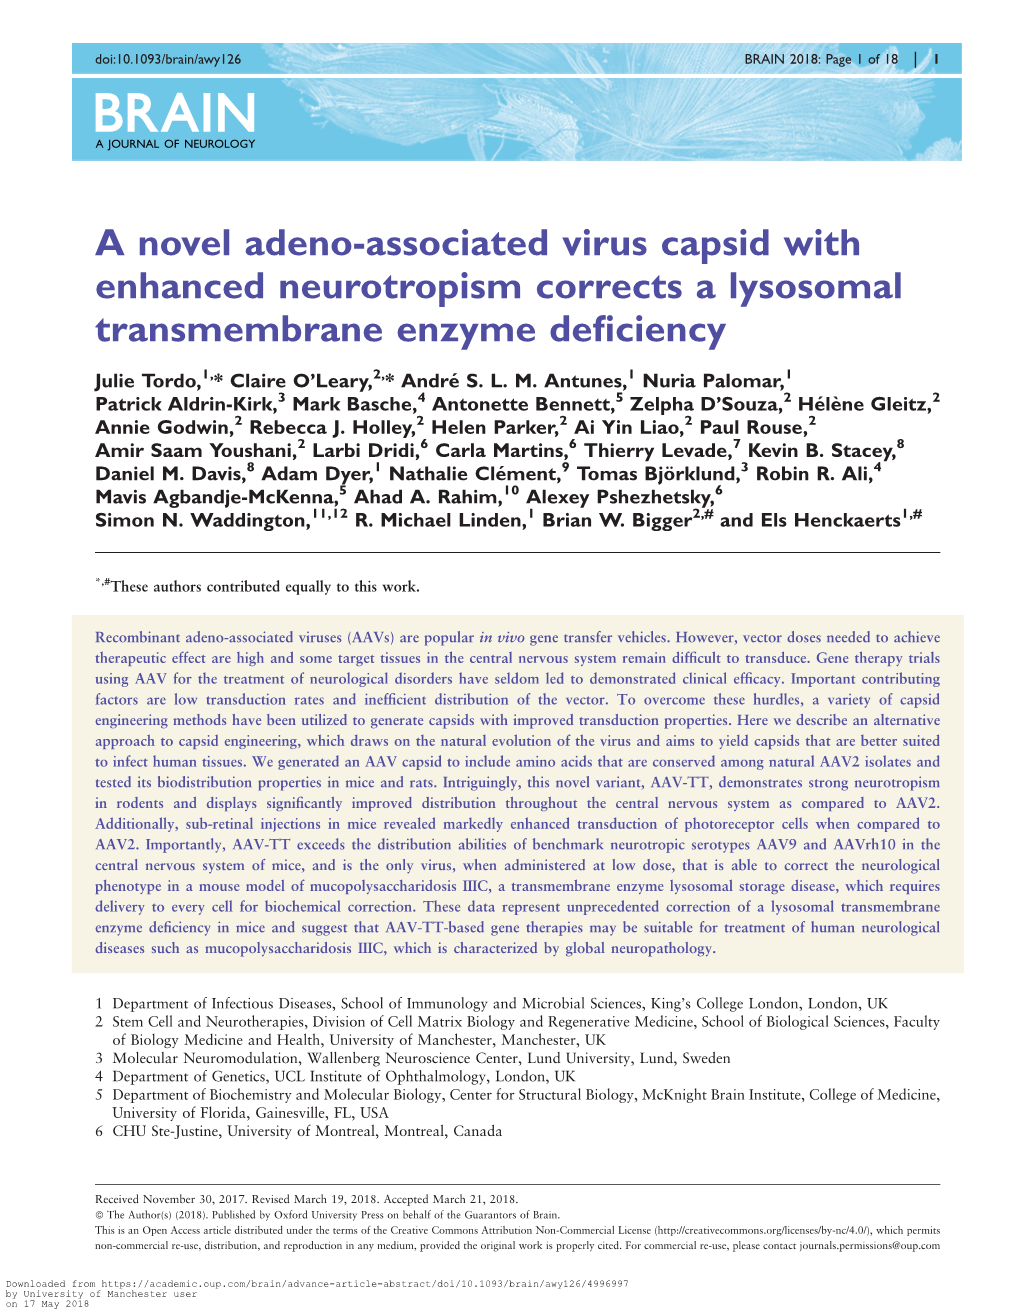 A Novel Adeno-Associated Virus Capsid with Enhanced Neurotropism Corrects a Lysosomal Transmembrane Enzyme Deﬁciency